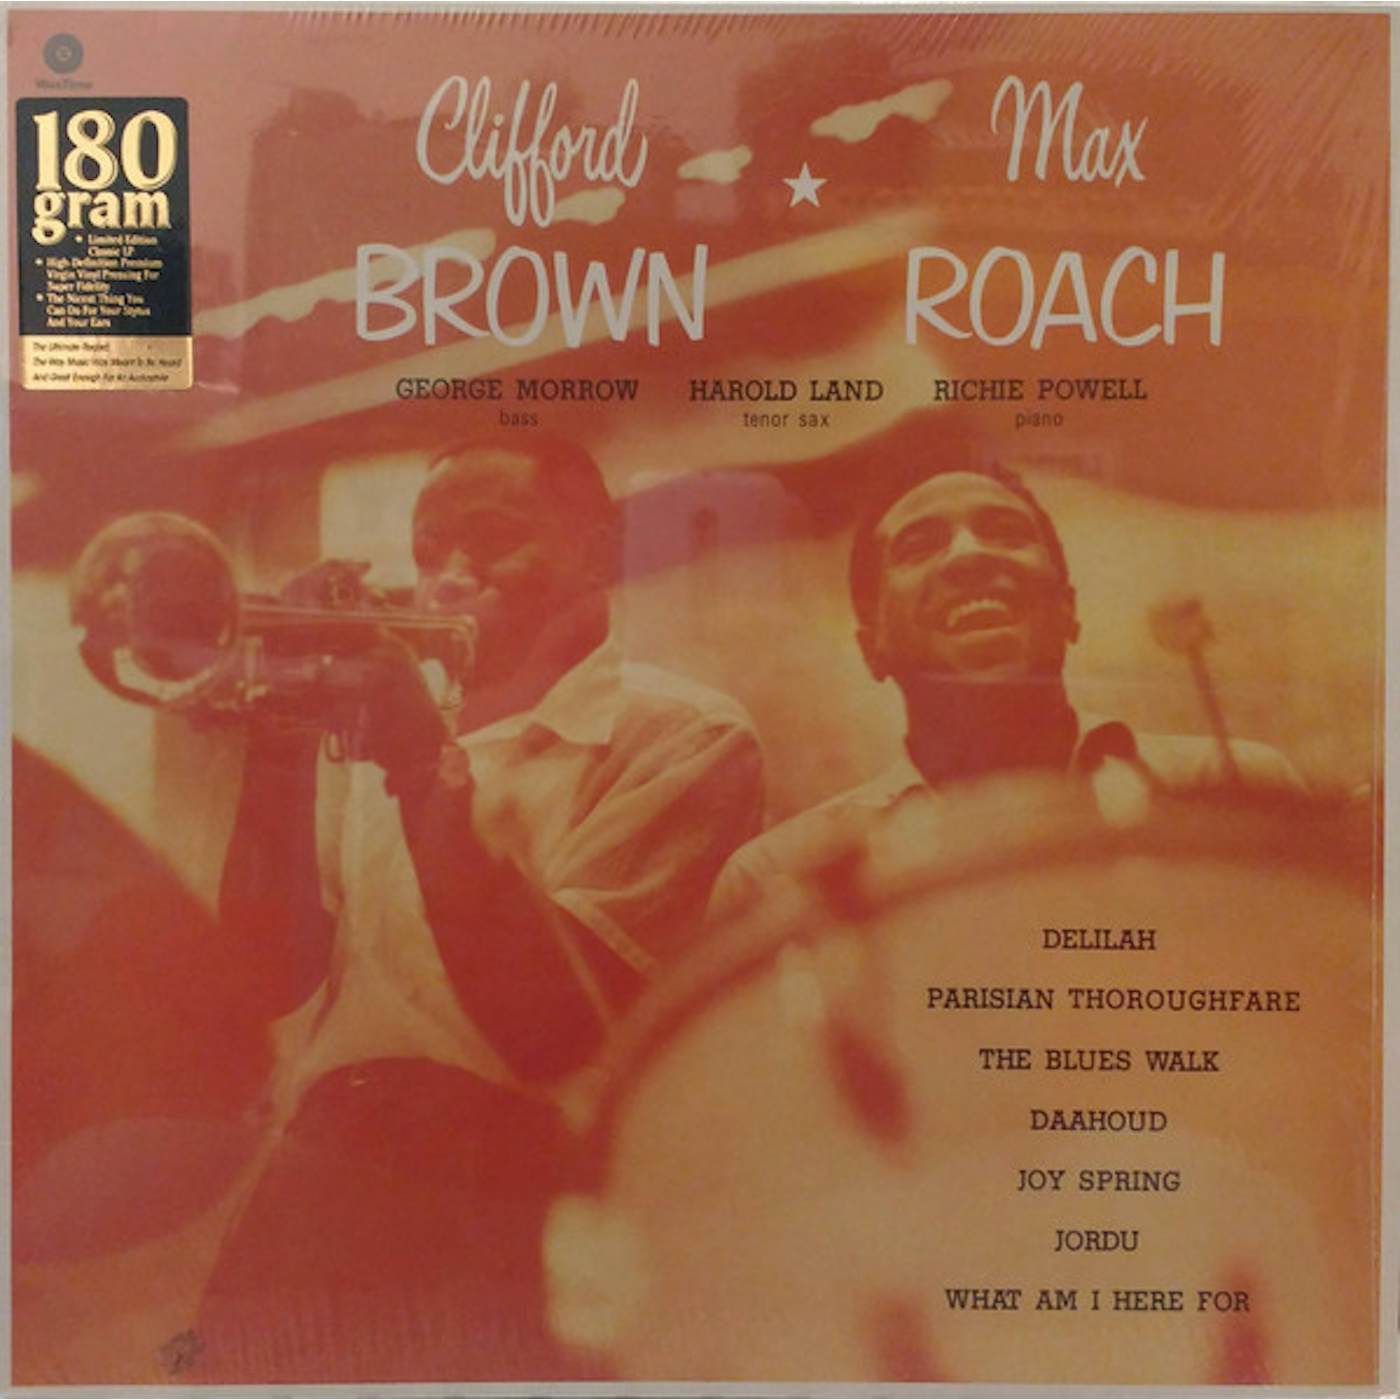 CLIFFORD BROWN & MAX ROACH (BONUS TRACK) Vinyl Record - 180 Gram Pressing